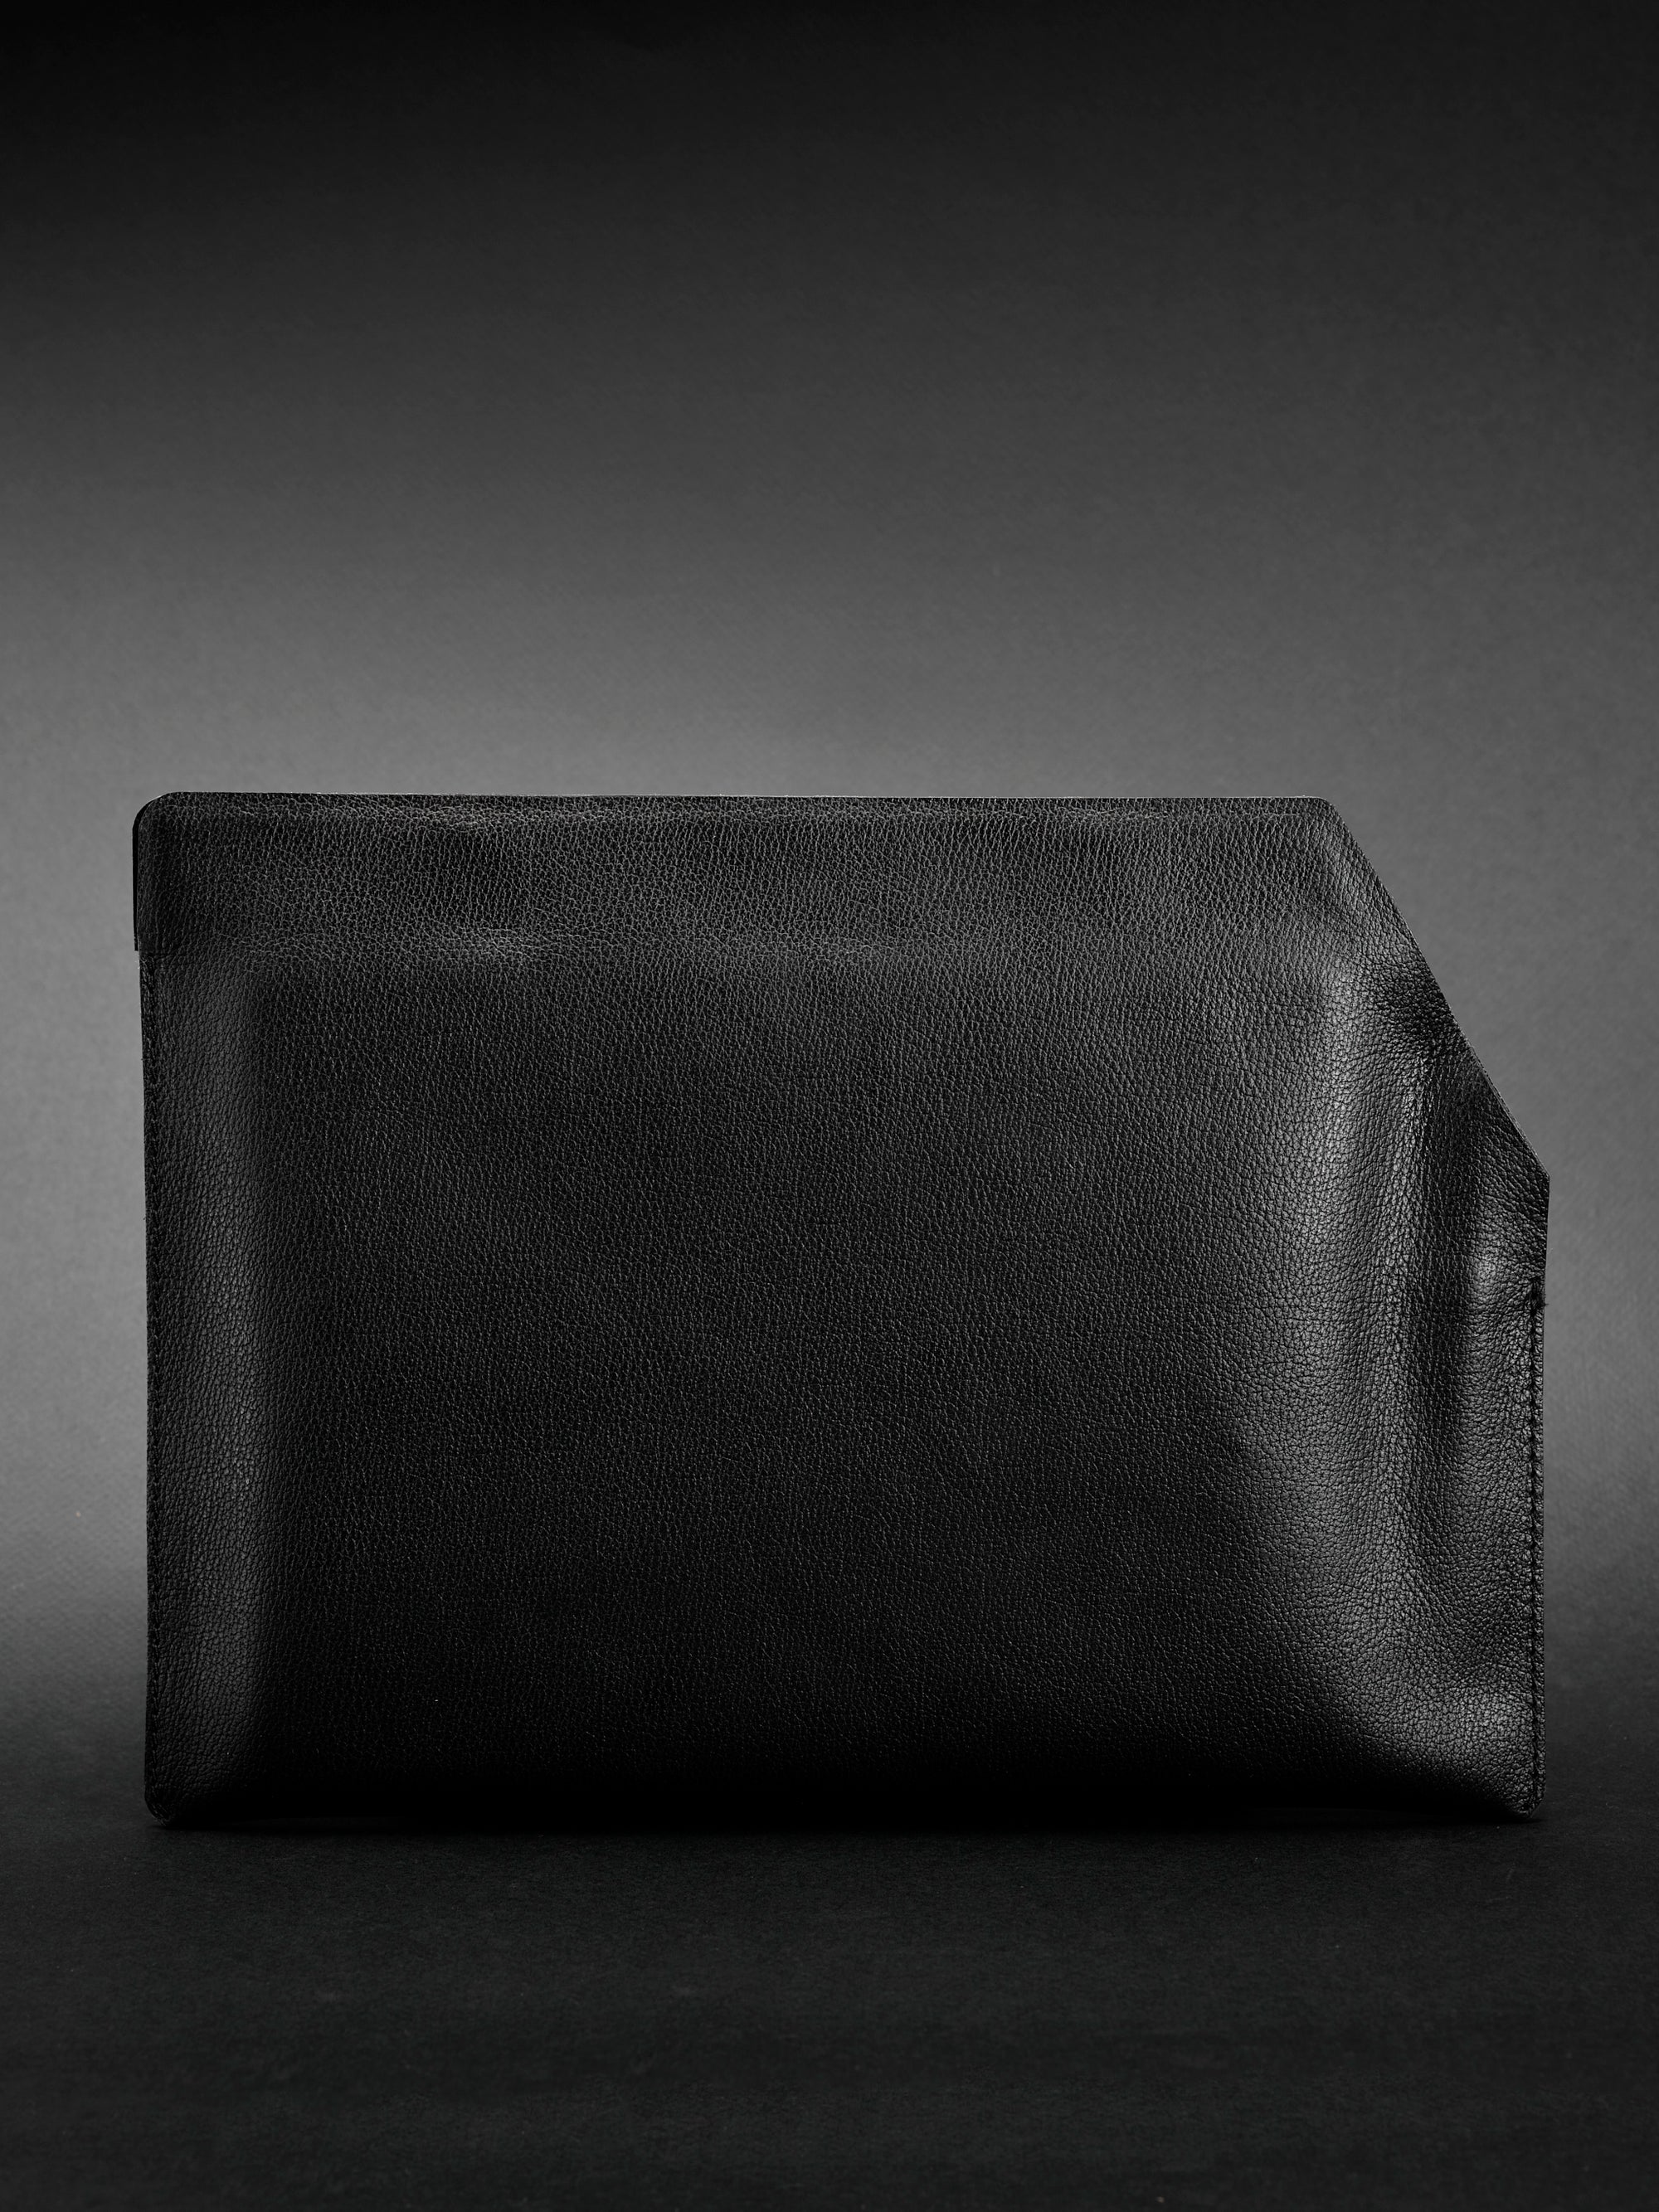 Full grain leather. Draftsman 7 iPad Sleeve Cover Black, iPad Pro 11-inch, iPad Pro 12.9-inch, M1 Chip by Capra Leather